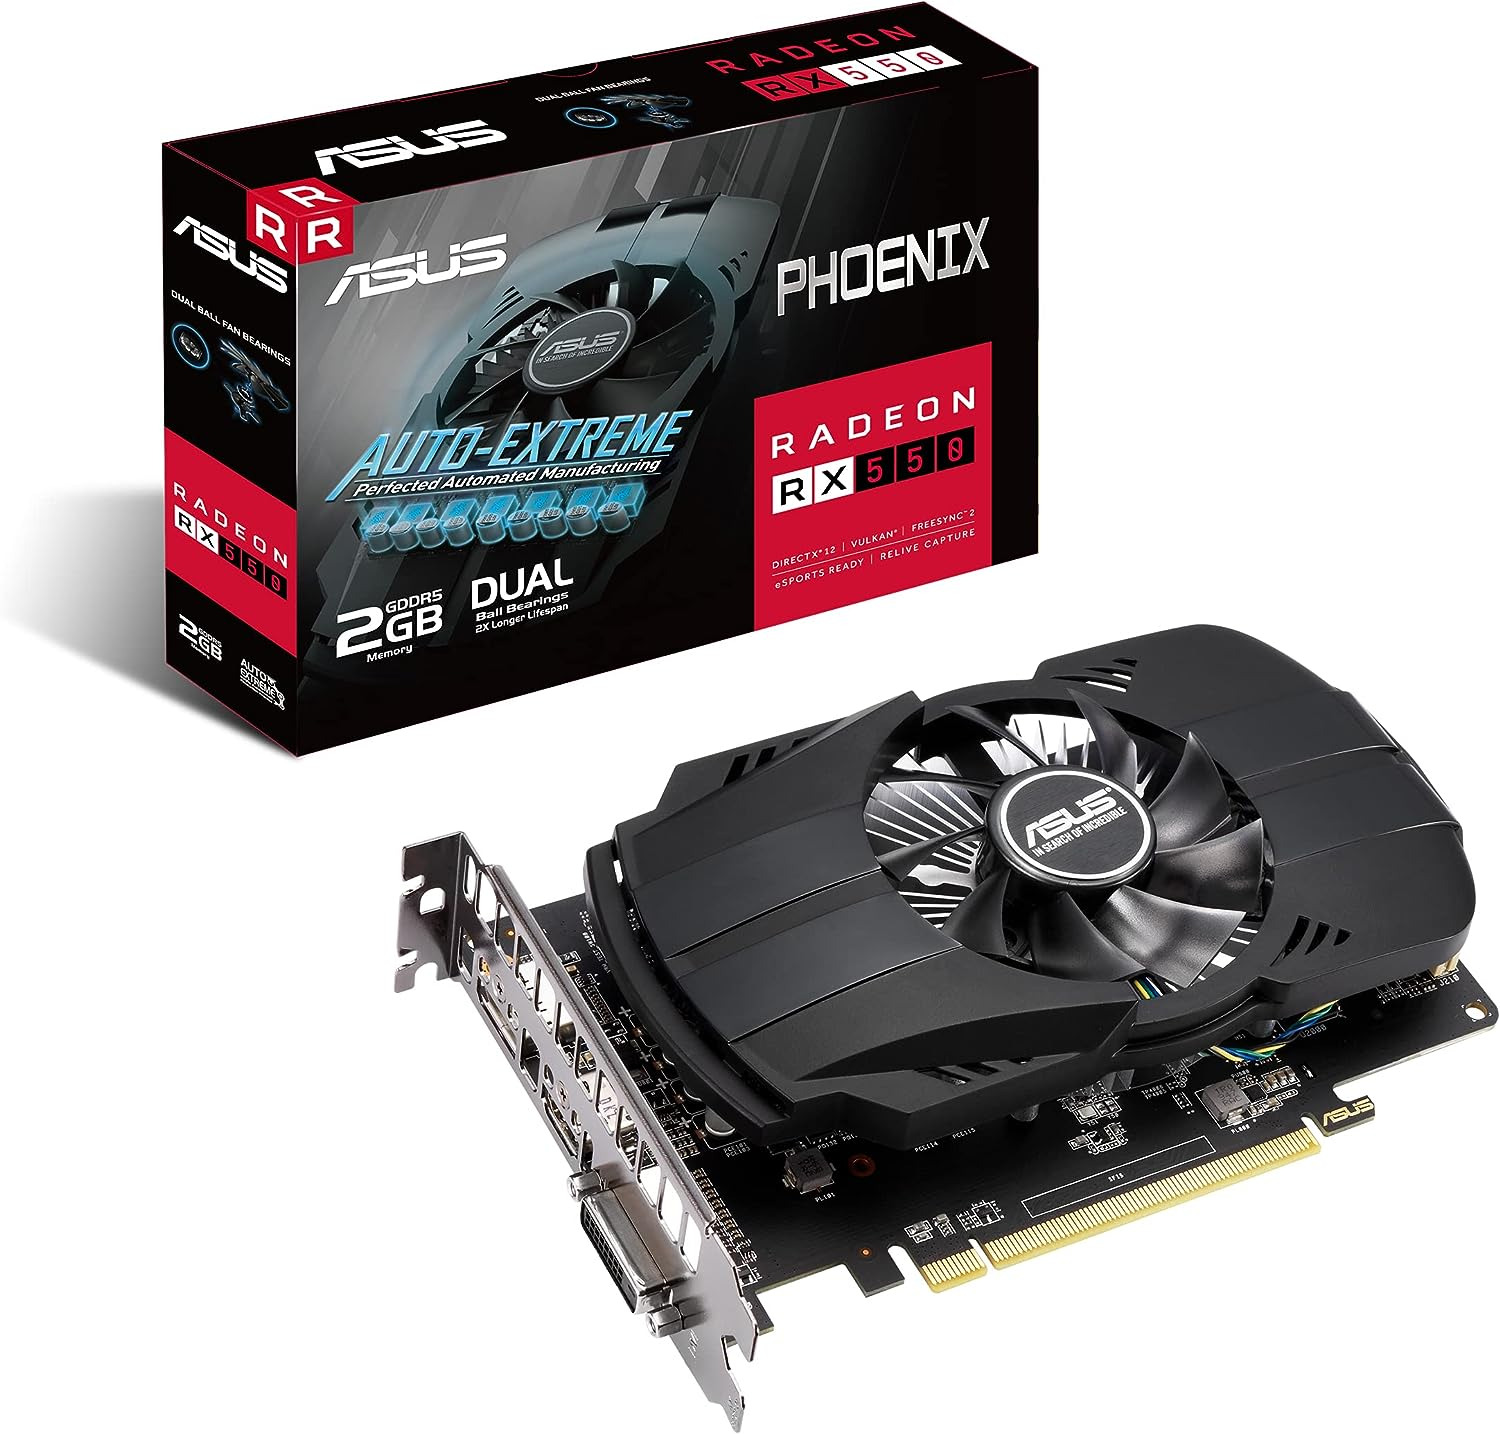 ASUS Phoenix AMD Radeon RX 550 Graphics Card (Pcie 3.0, 2GB GDDR5 Memory, HDMI, 